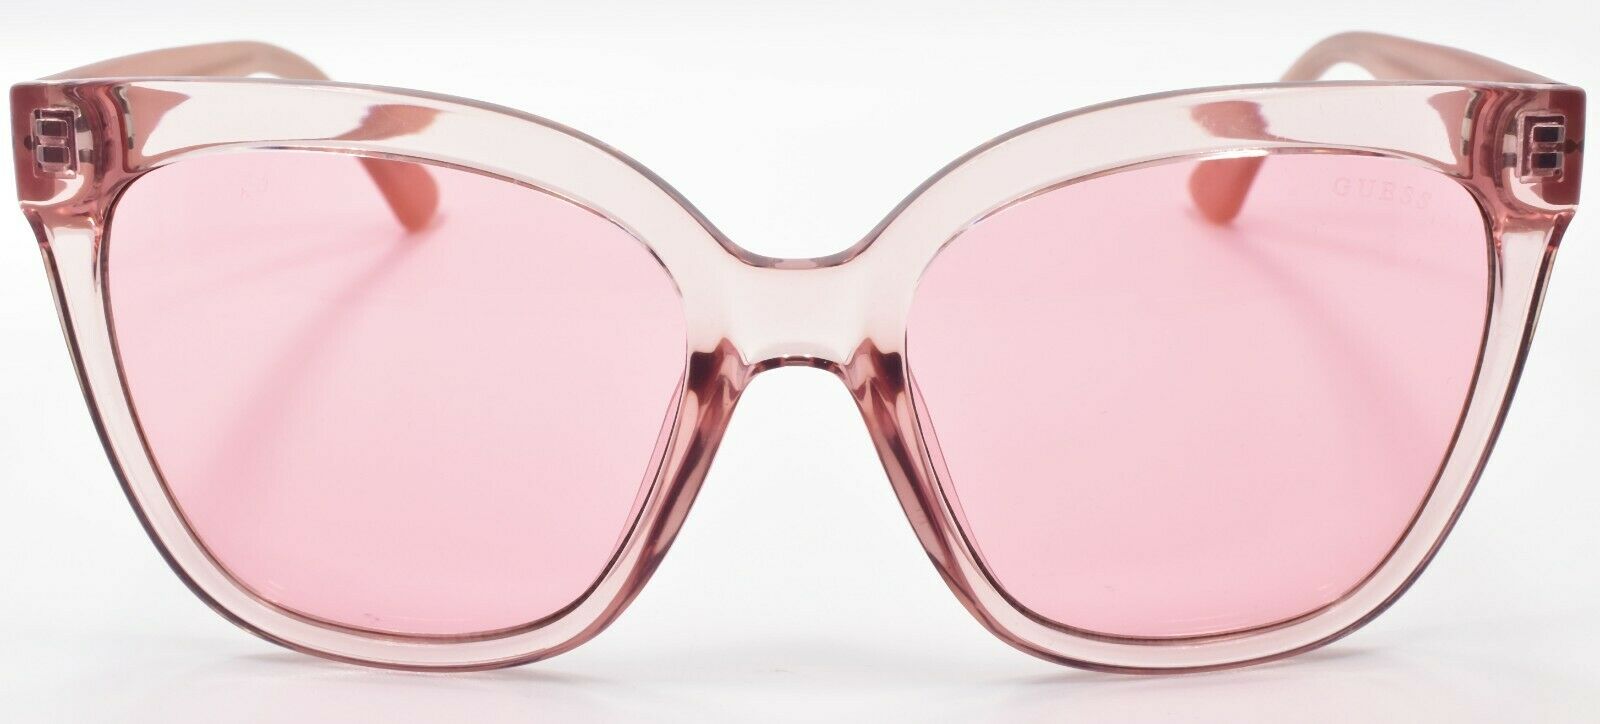 2-GUESS GU7612 74S Women's Sunglasses 55-18-145 Crystal Pink / Bordeaux-889214044938-IKSpecs